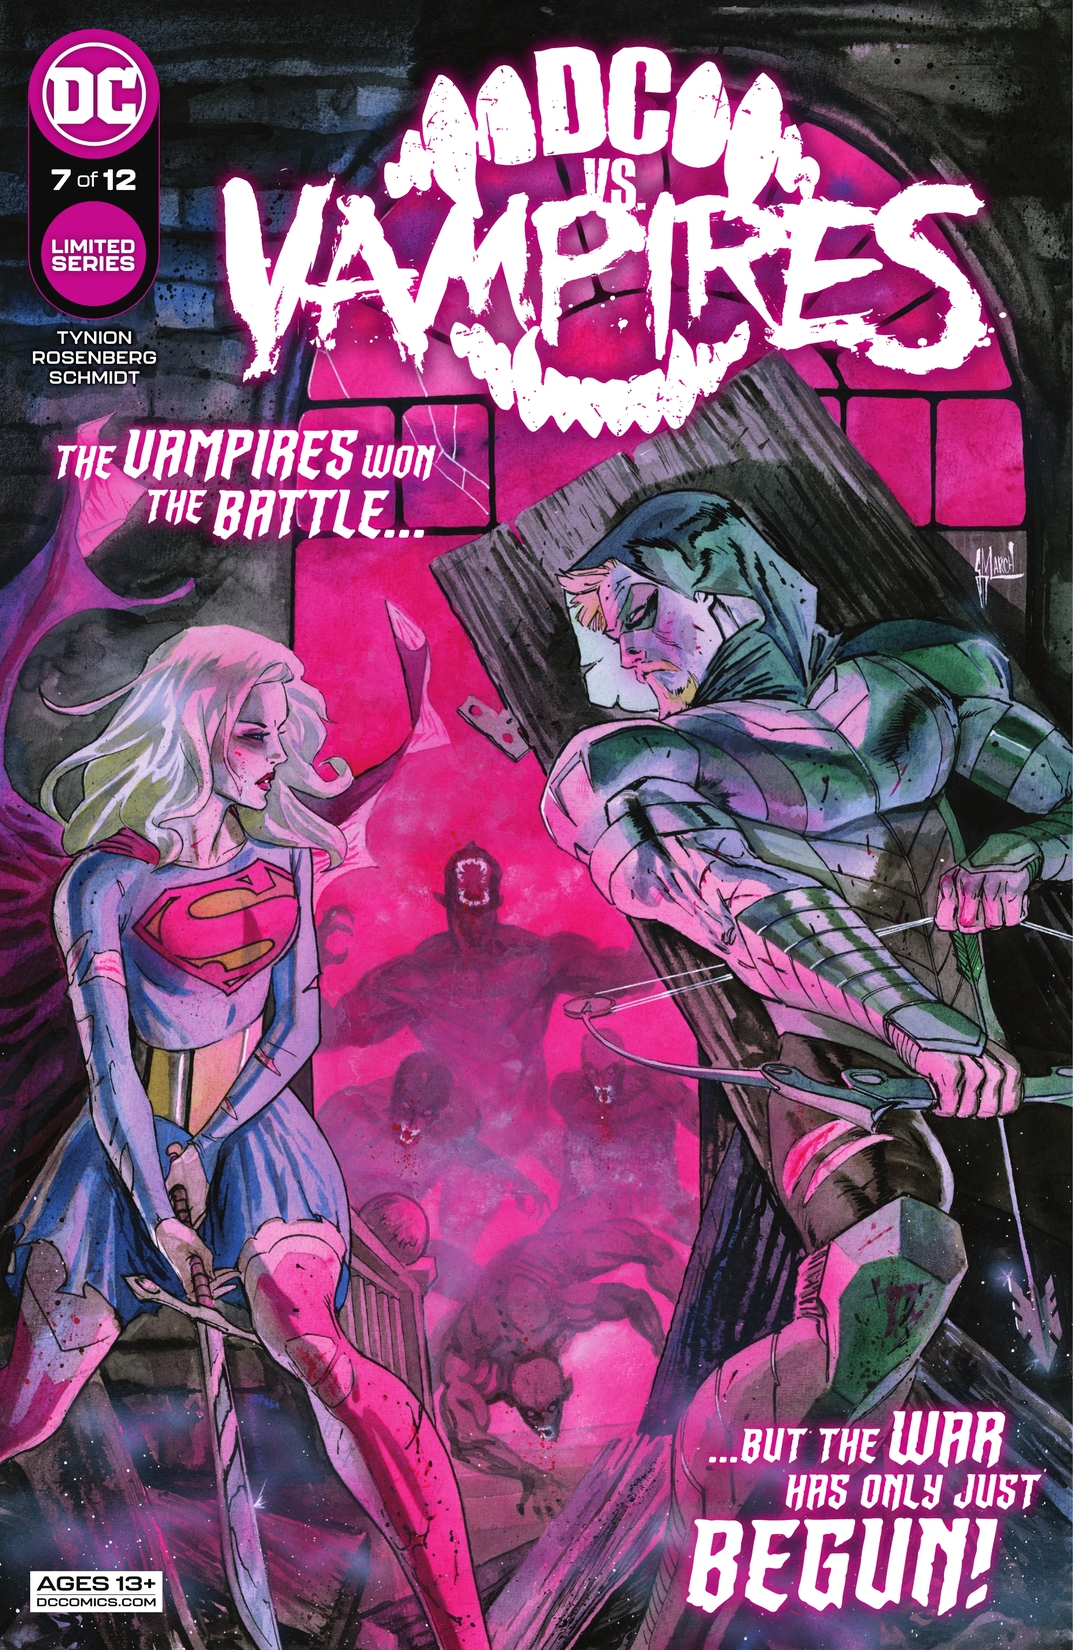 DC vs. Vampires #7 preview images